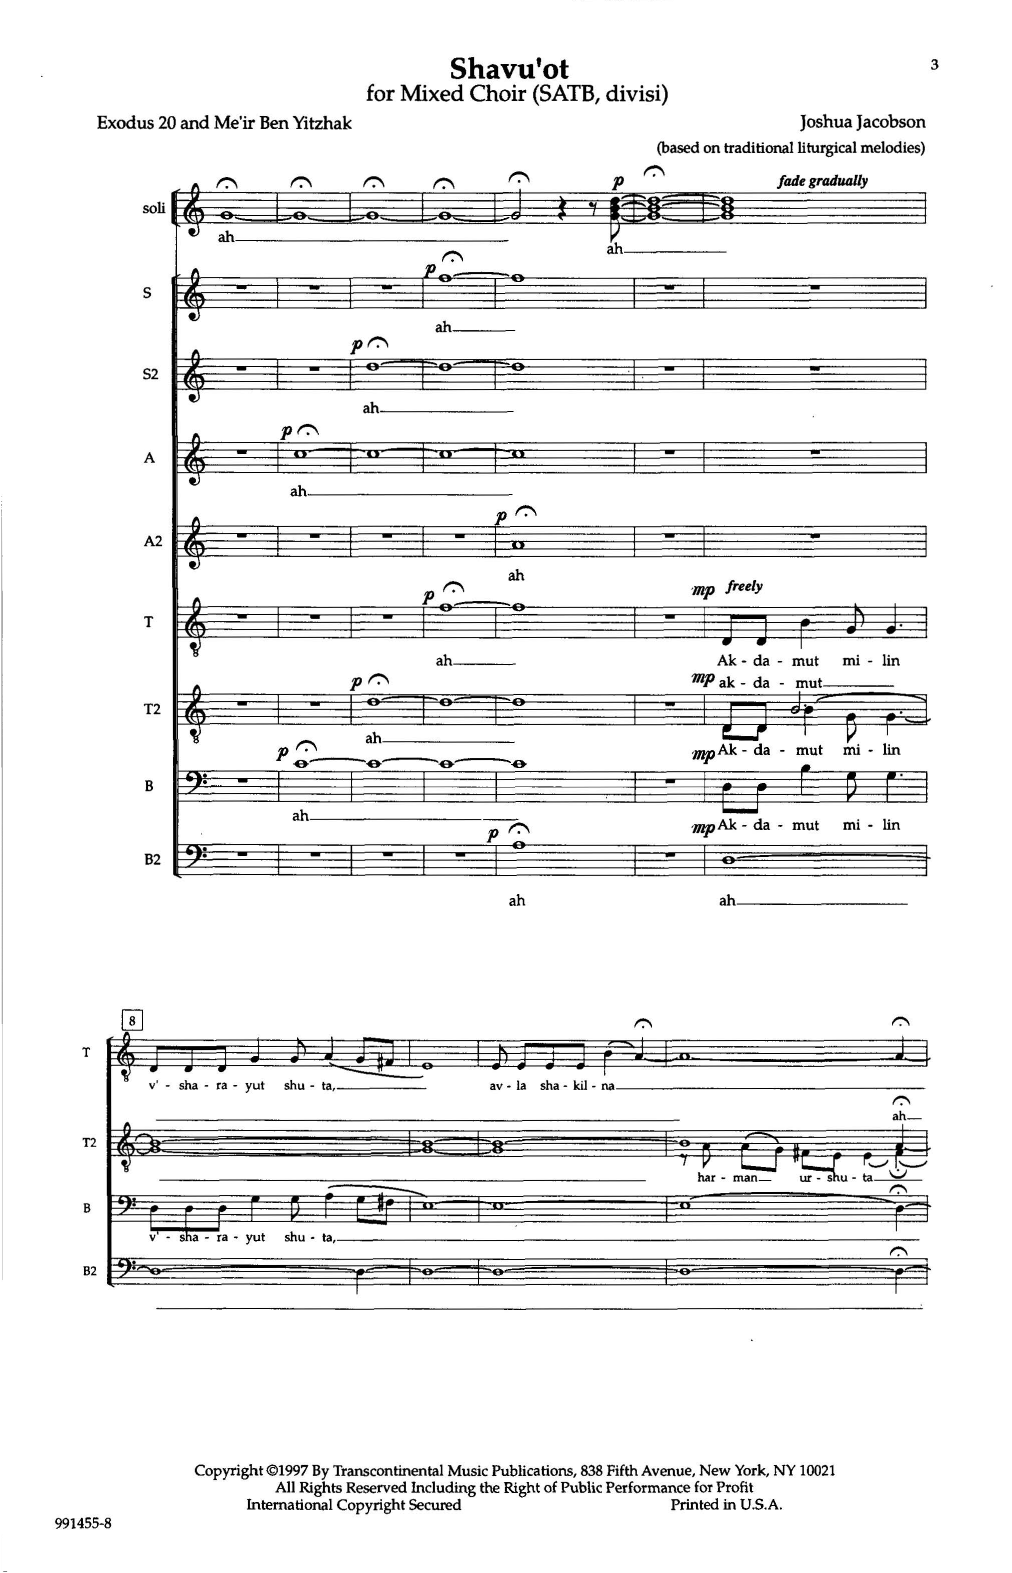 Joshua Jacobson Shavu'ot Sheet Music Notes & Chords for SATB - Download or Print PDF